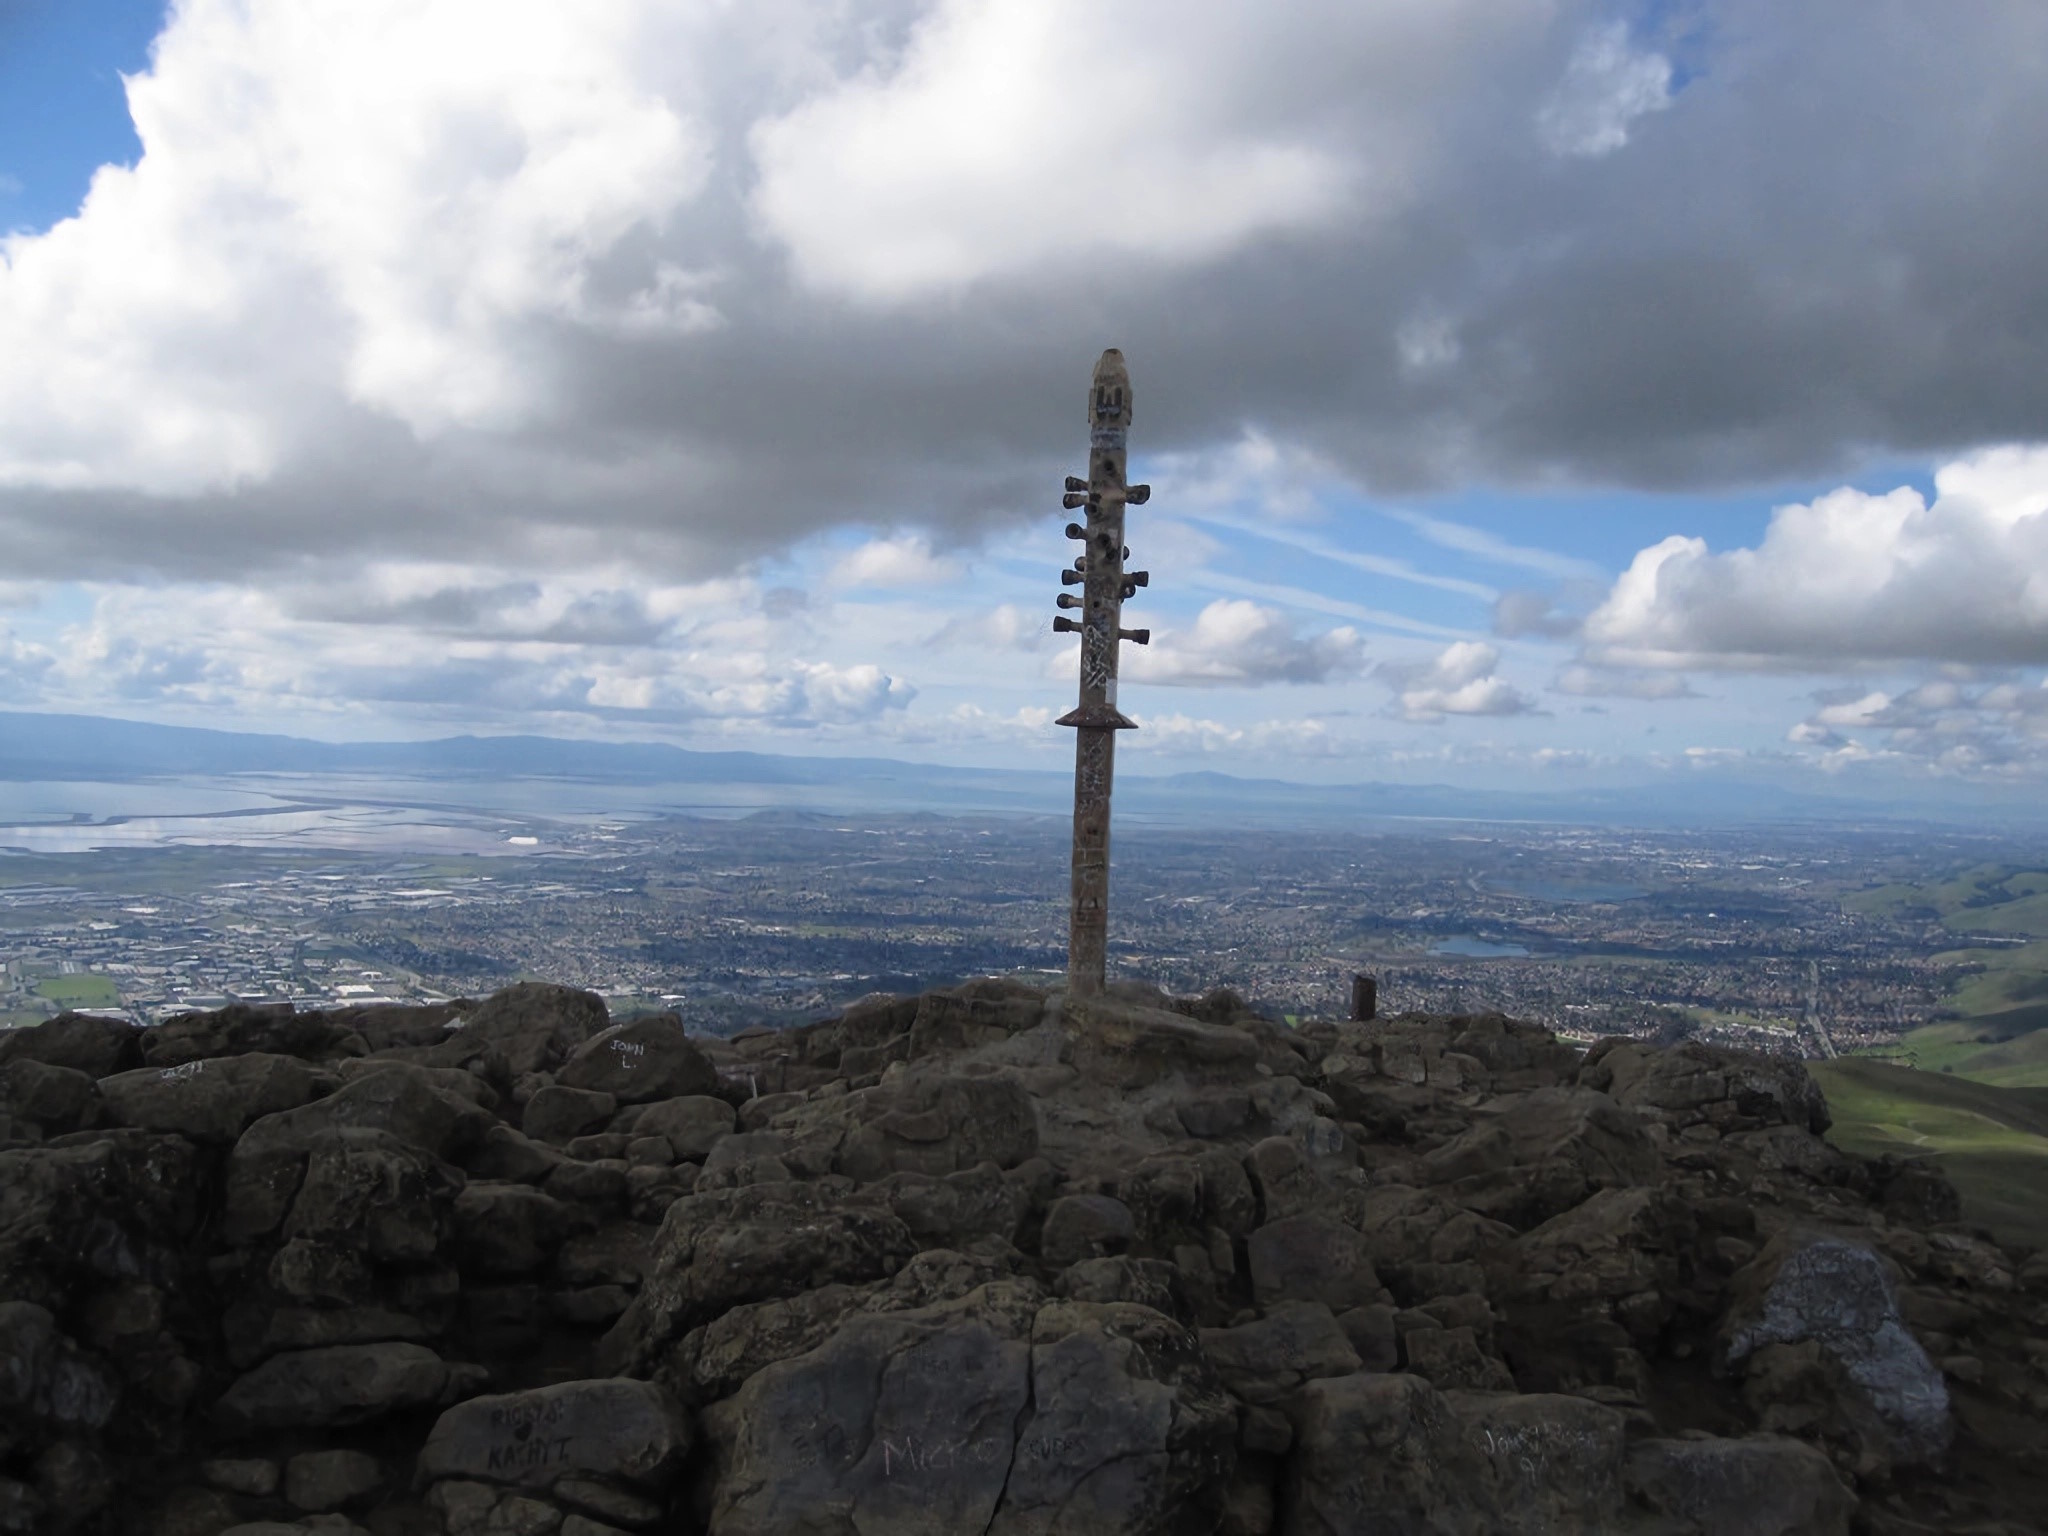 Iconic Mission Peak Pole Vandalized in Fremont